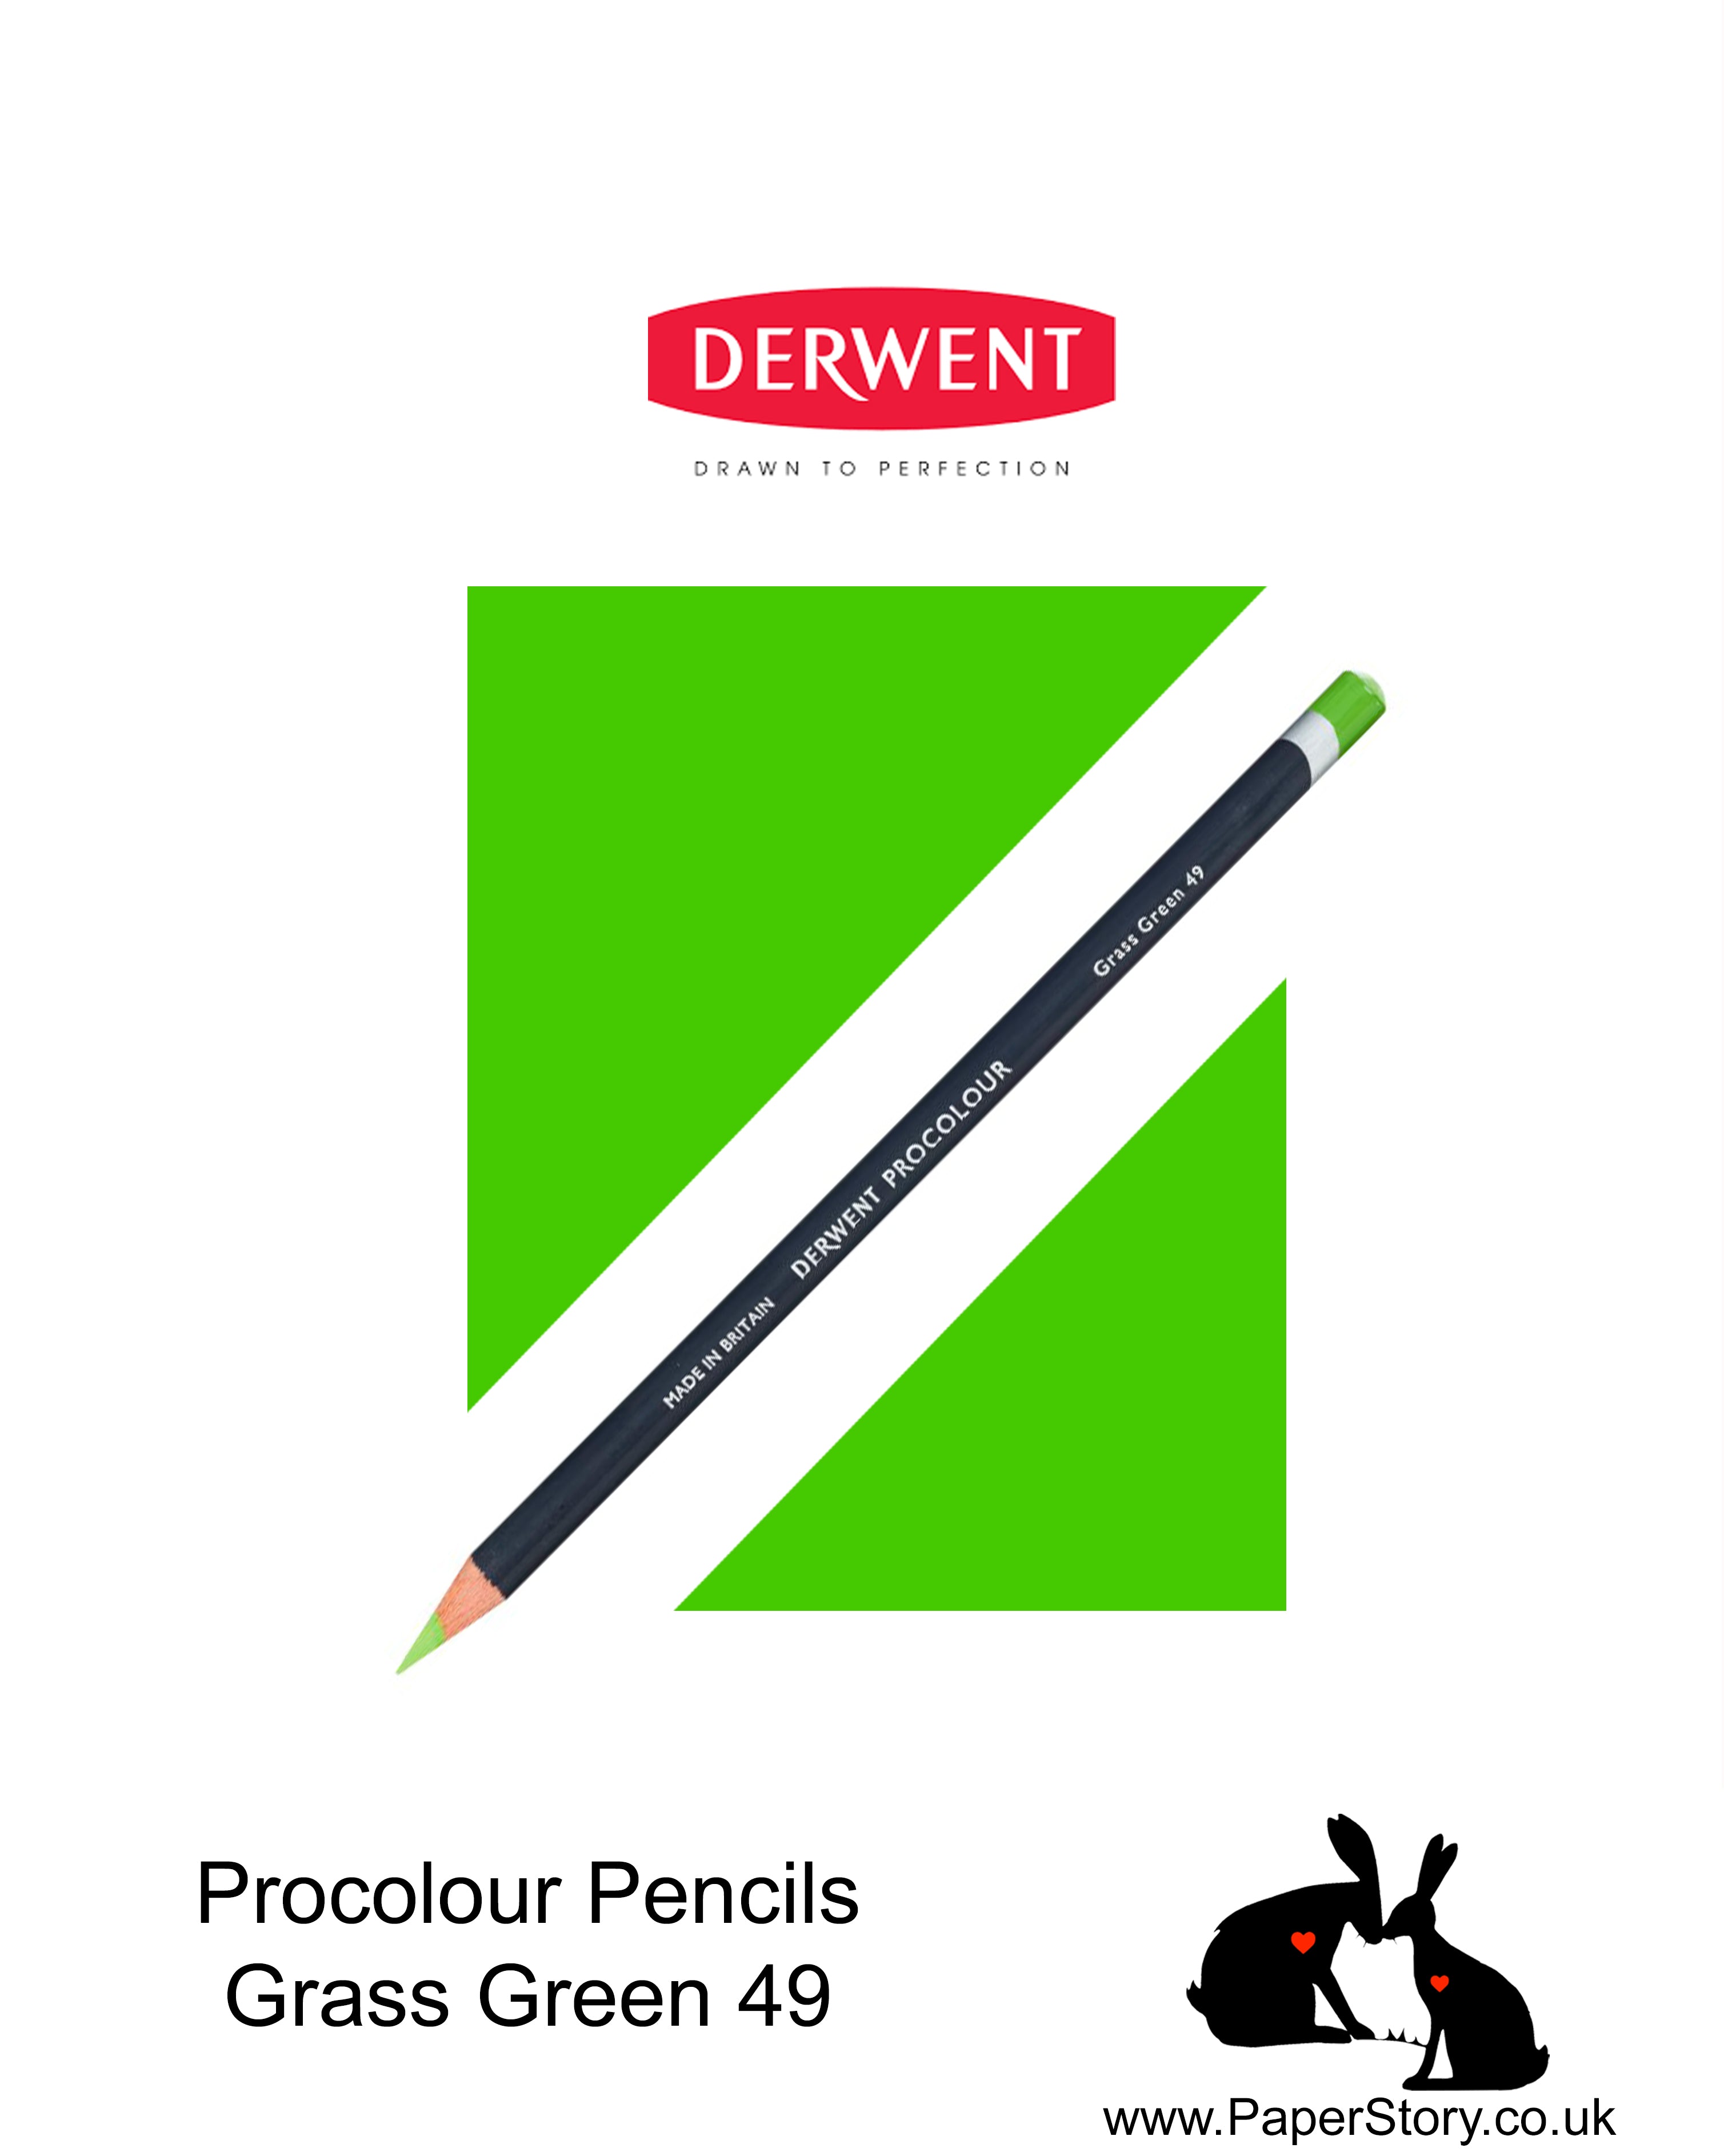 Derwent Procolour pencil Grass Green 49